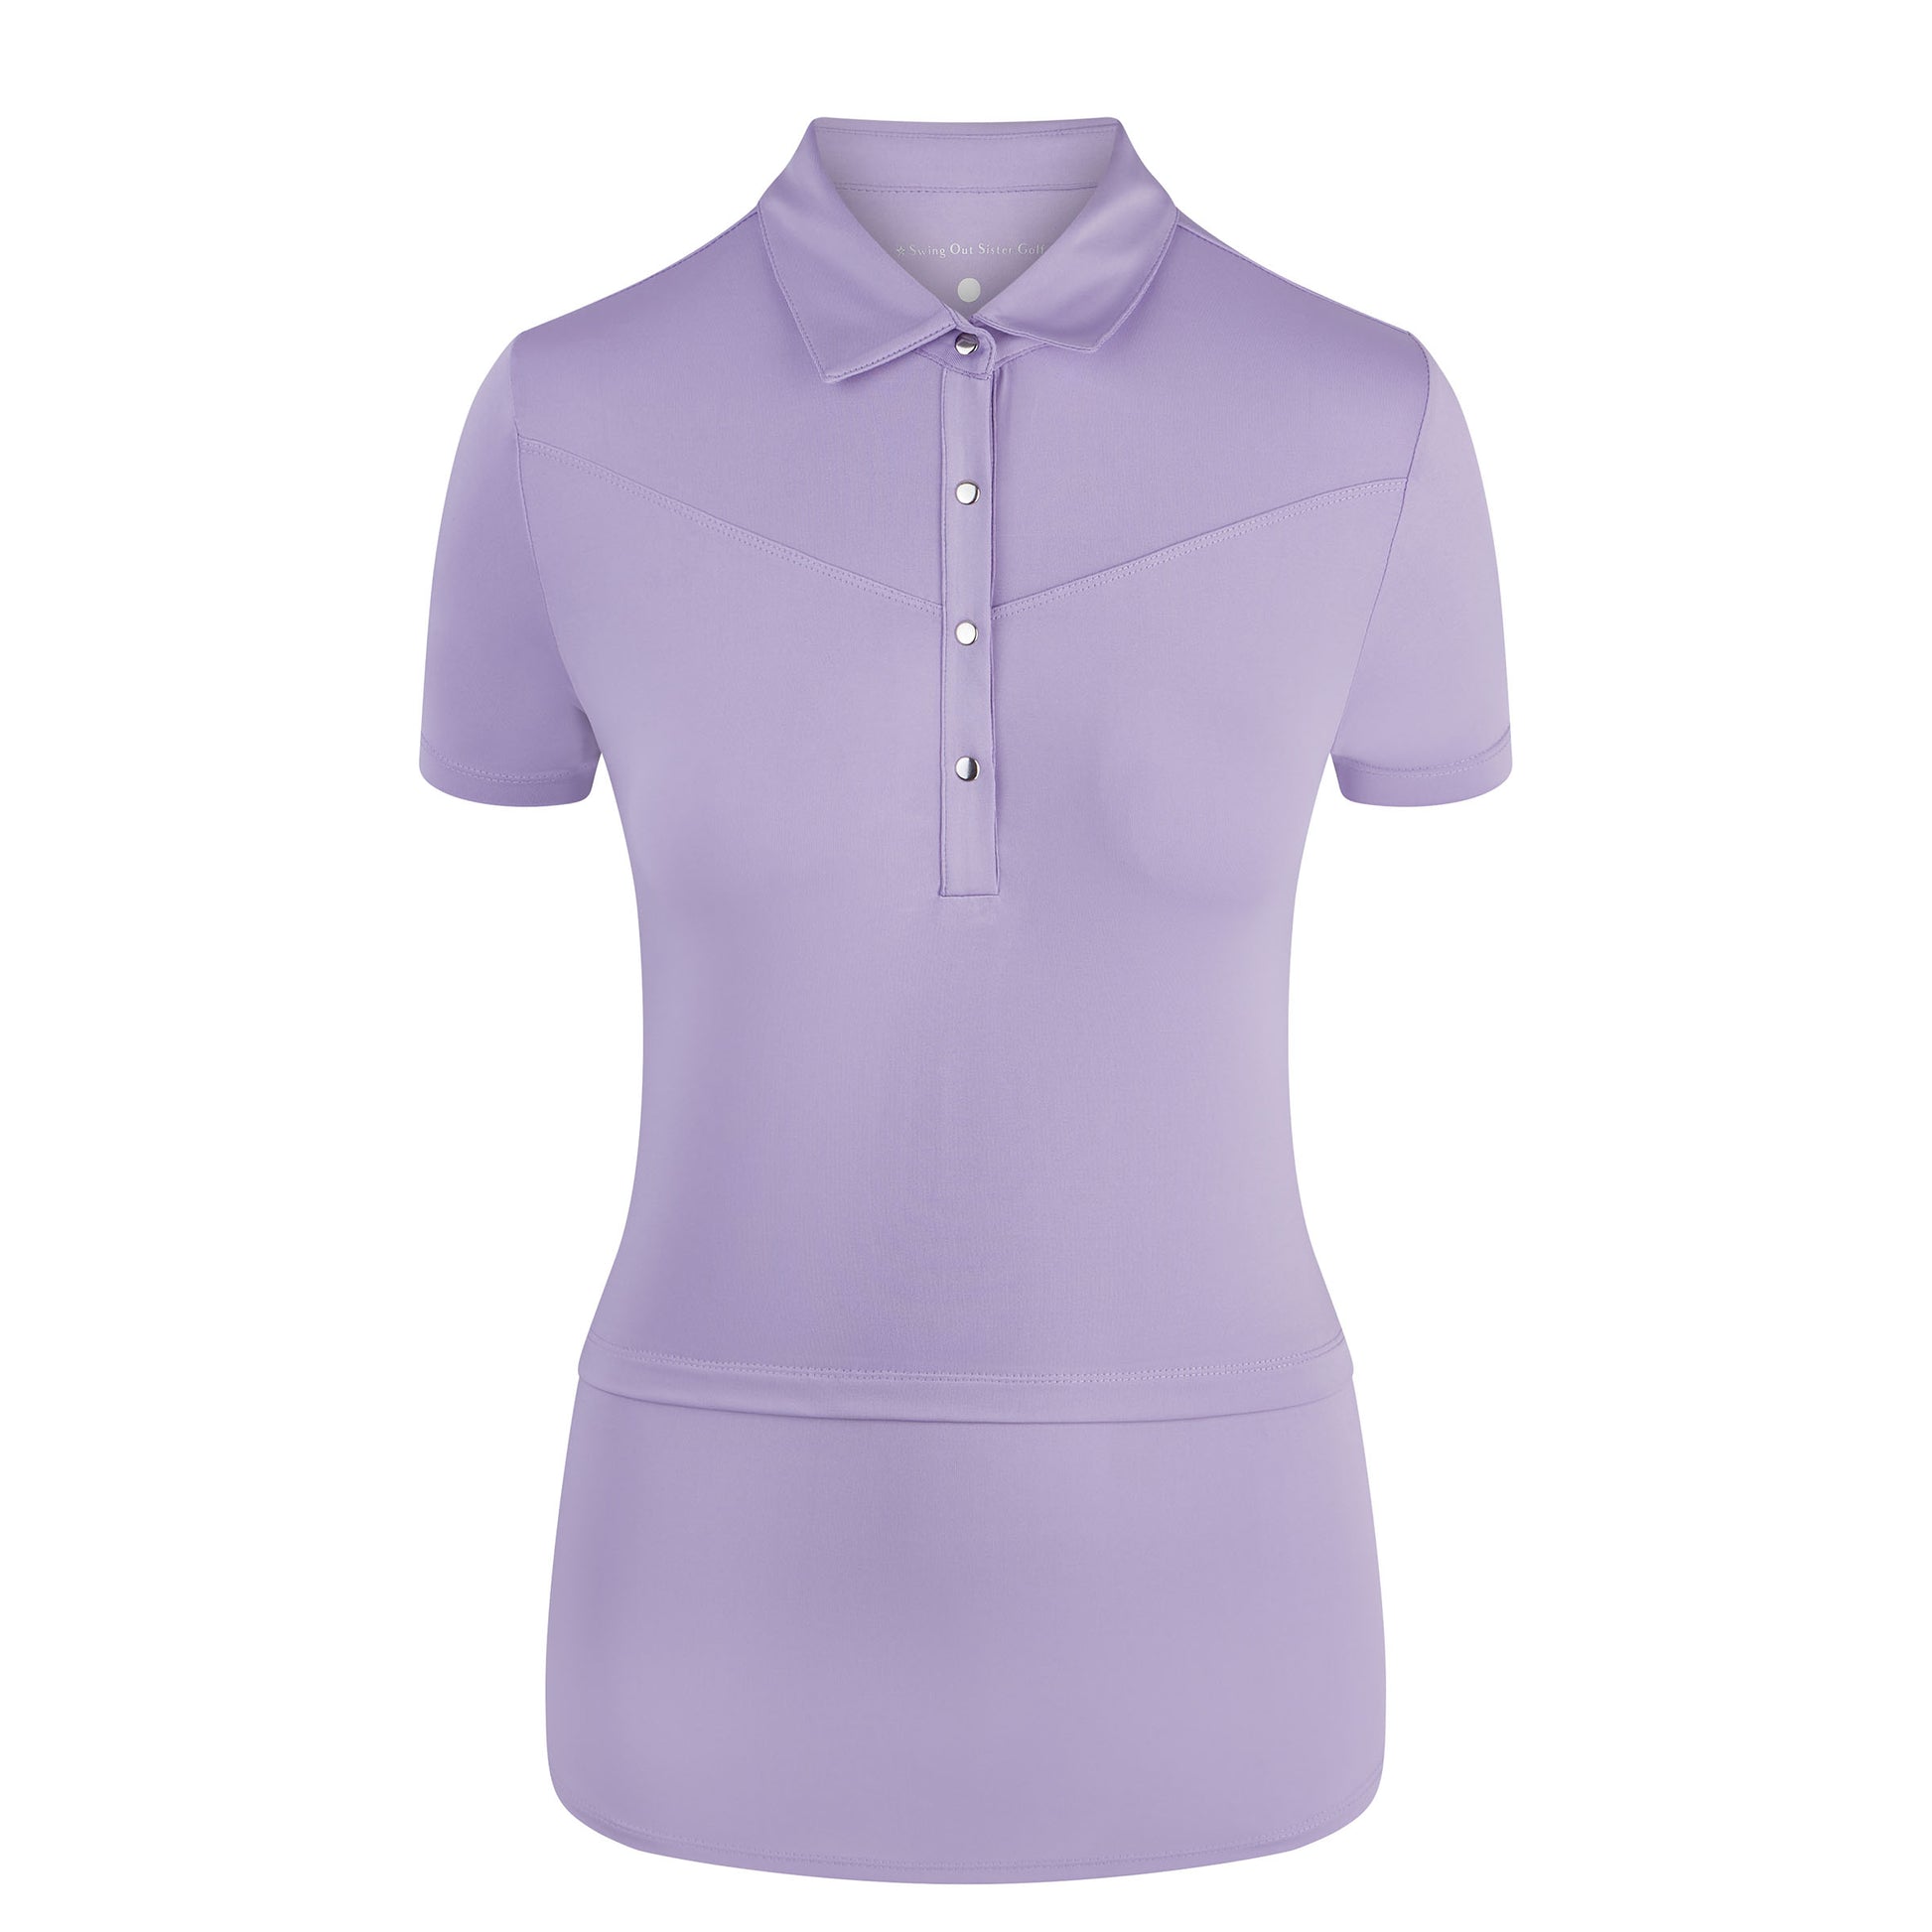 Swing Out Sister Ladies Cap Sleeve Golf Polo in Digital Lavender